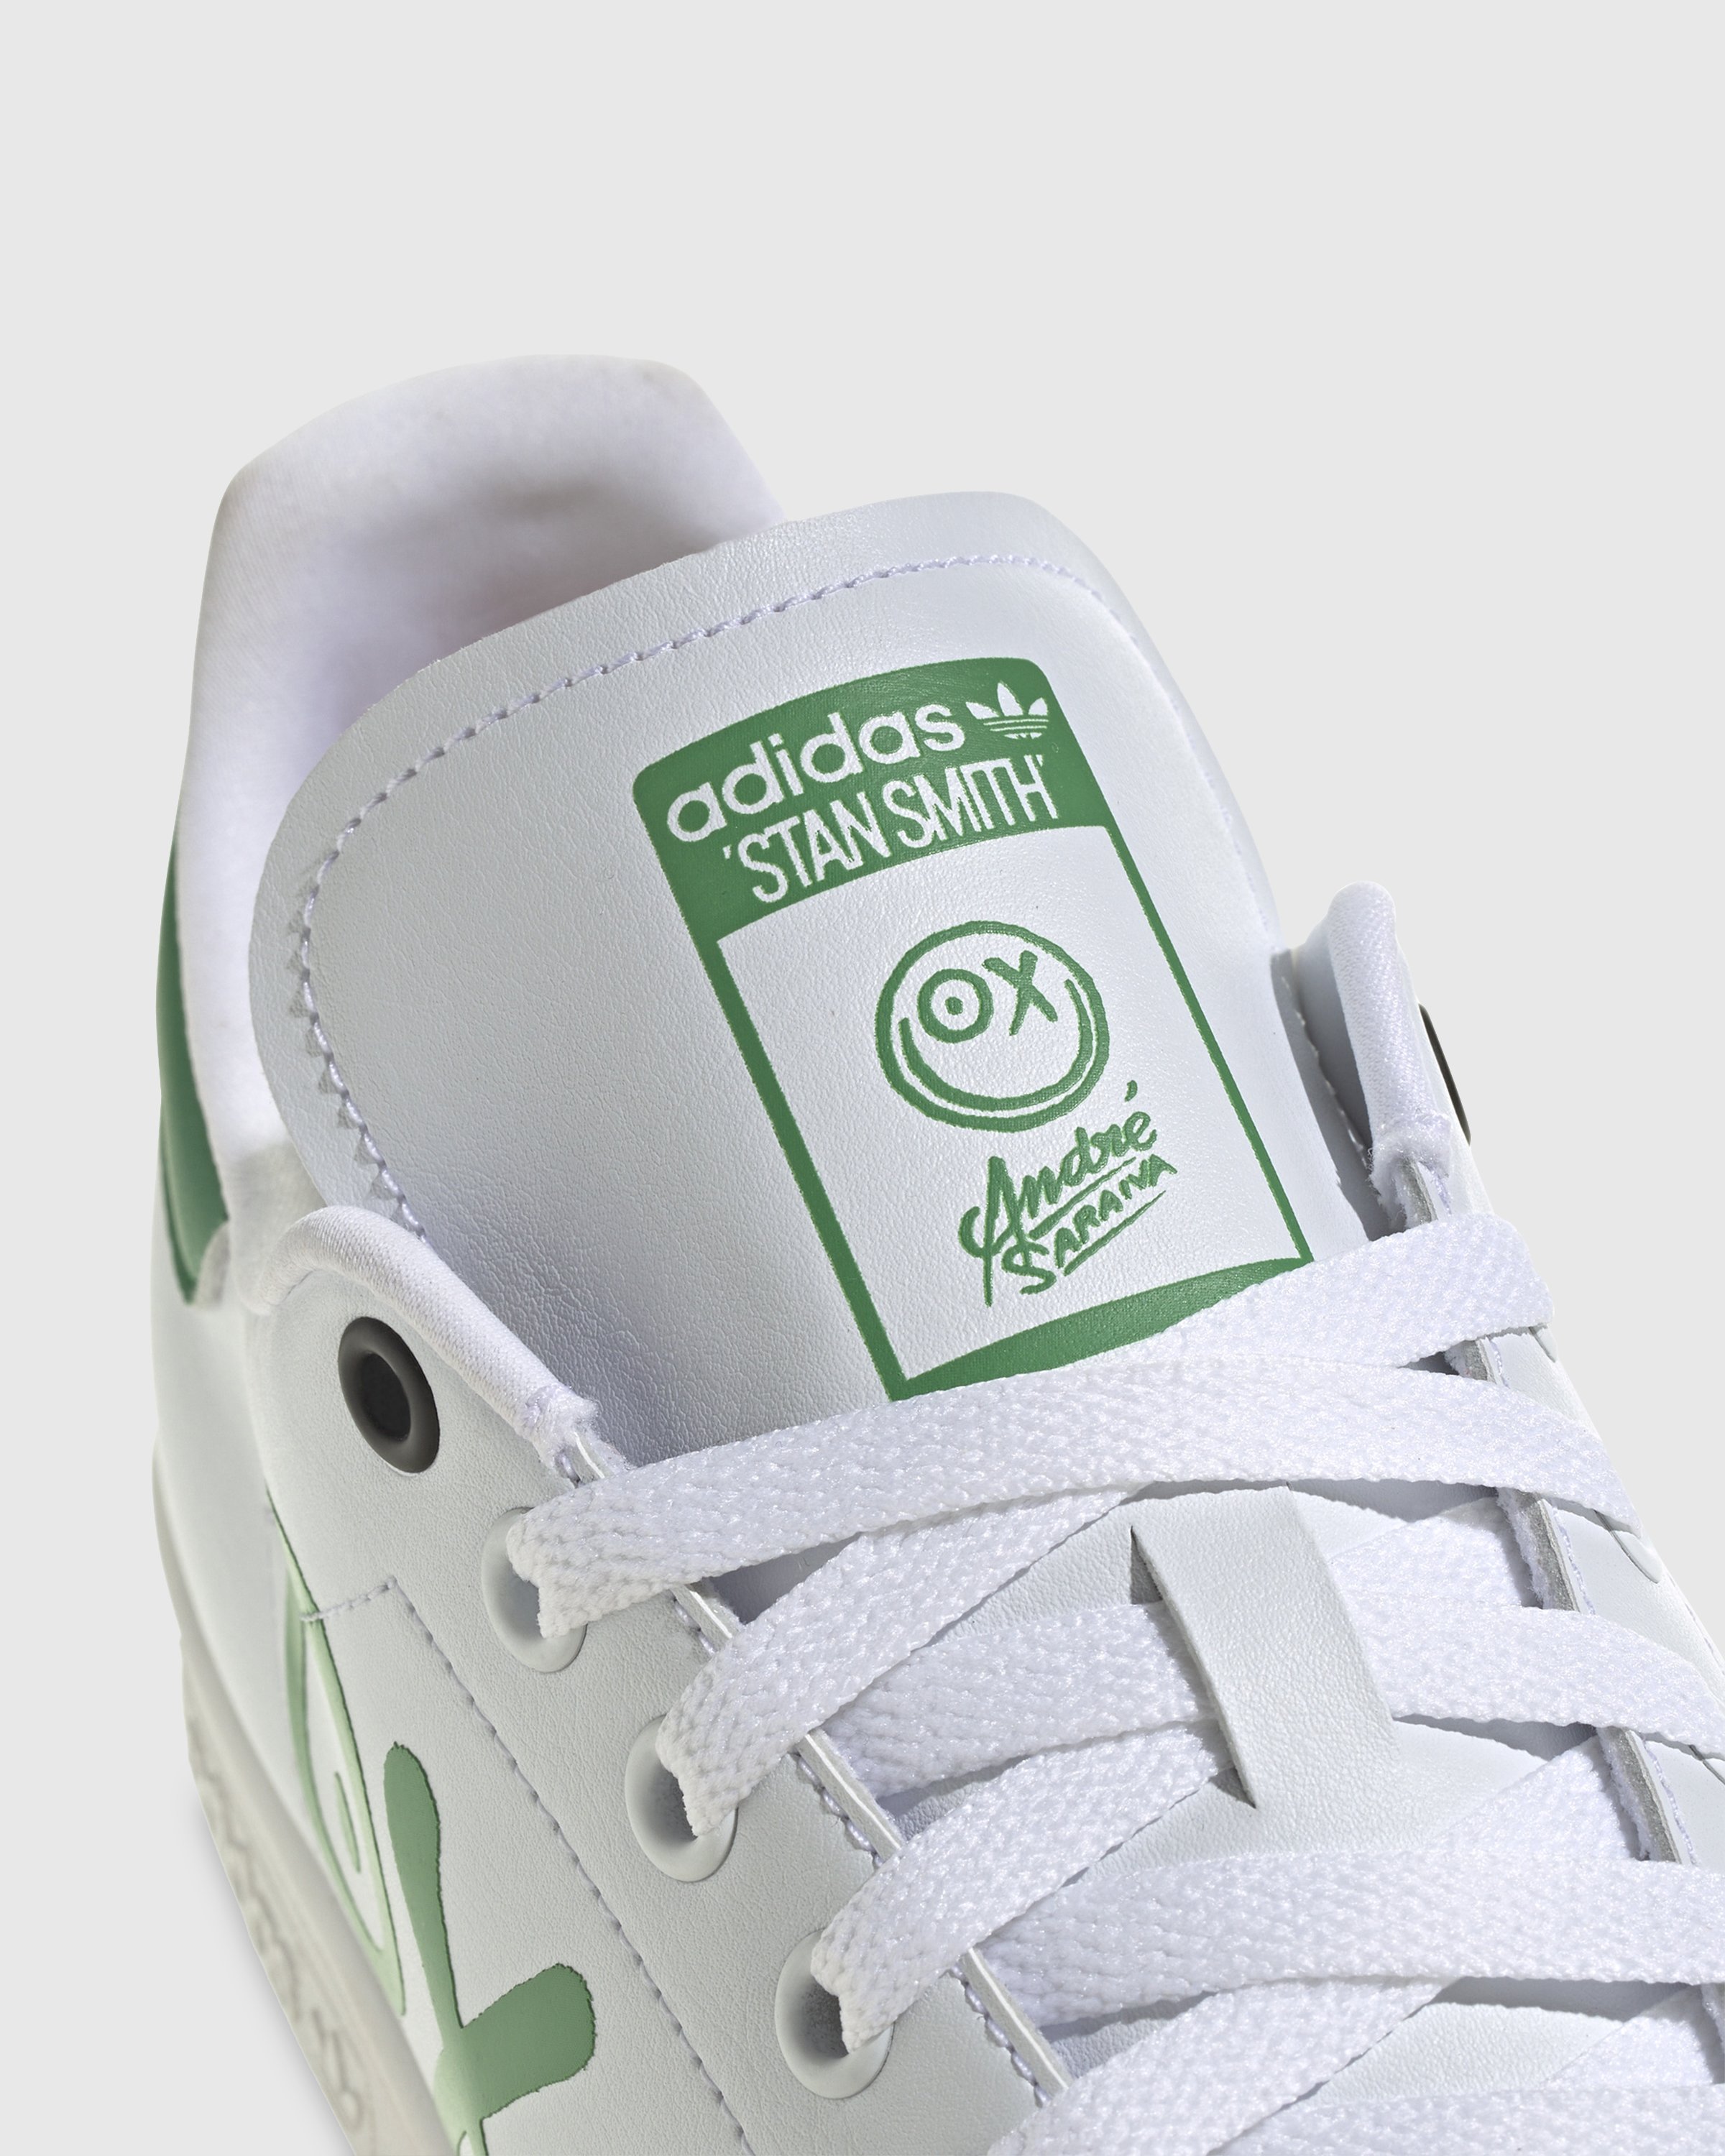 Adidas - André Saraiva Stan Smith White/Green - Footwear - White - Image 6